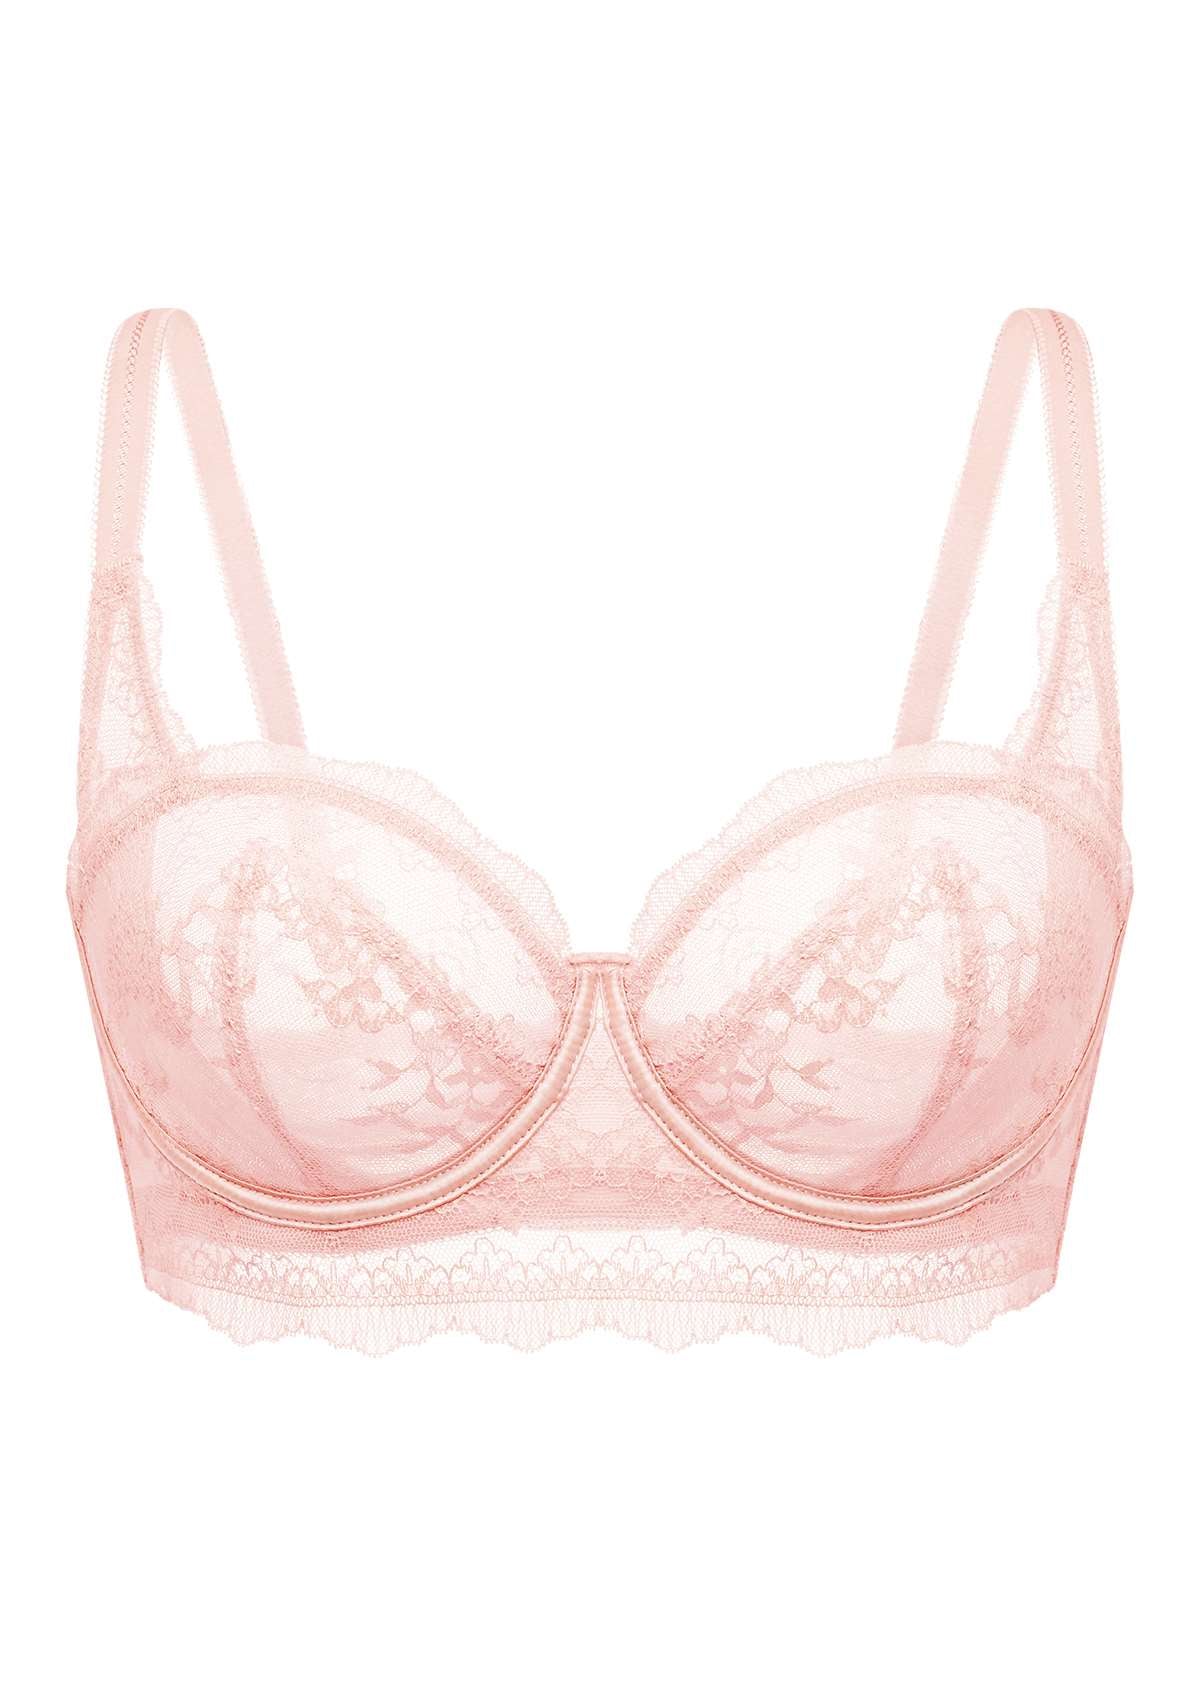 HSIA Floral Lace Unlined Bridal Balconette Delicate Bra Panty Set - Pink / 38 / DD/E